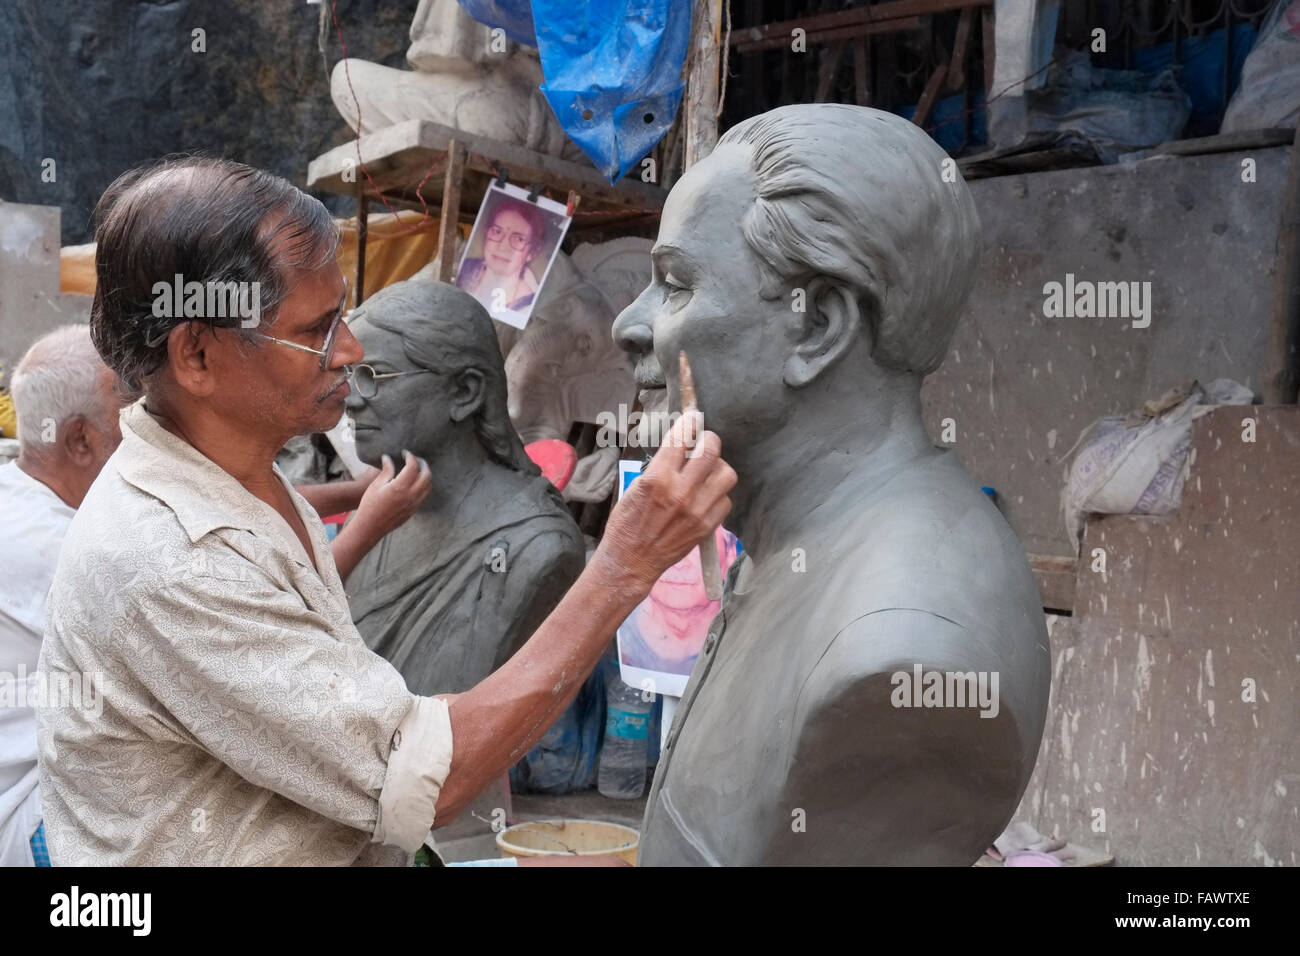 Artigiani scolpire figure di argilla a Vasai trimestre, Kumortuli, Kolkata (Calcutta), India. Foto Stock